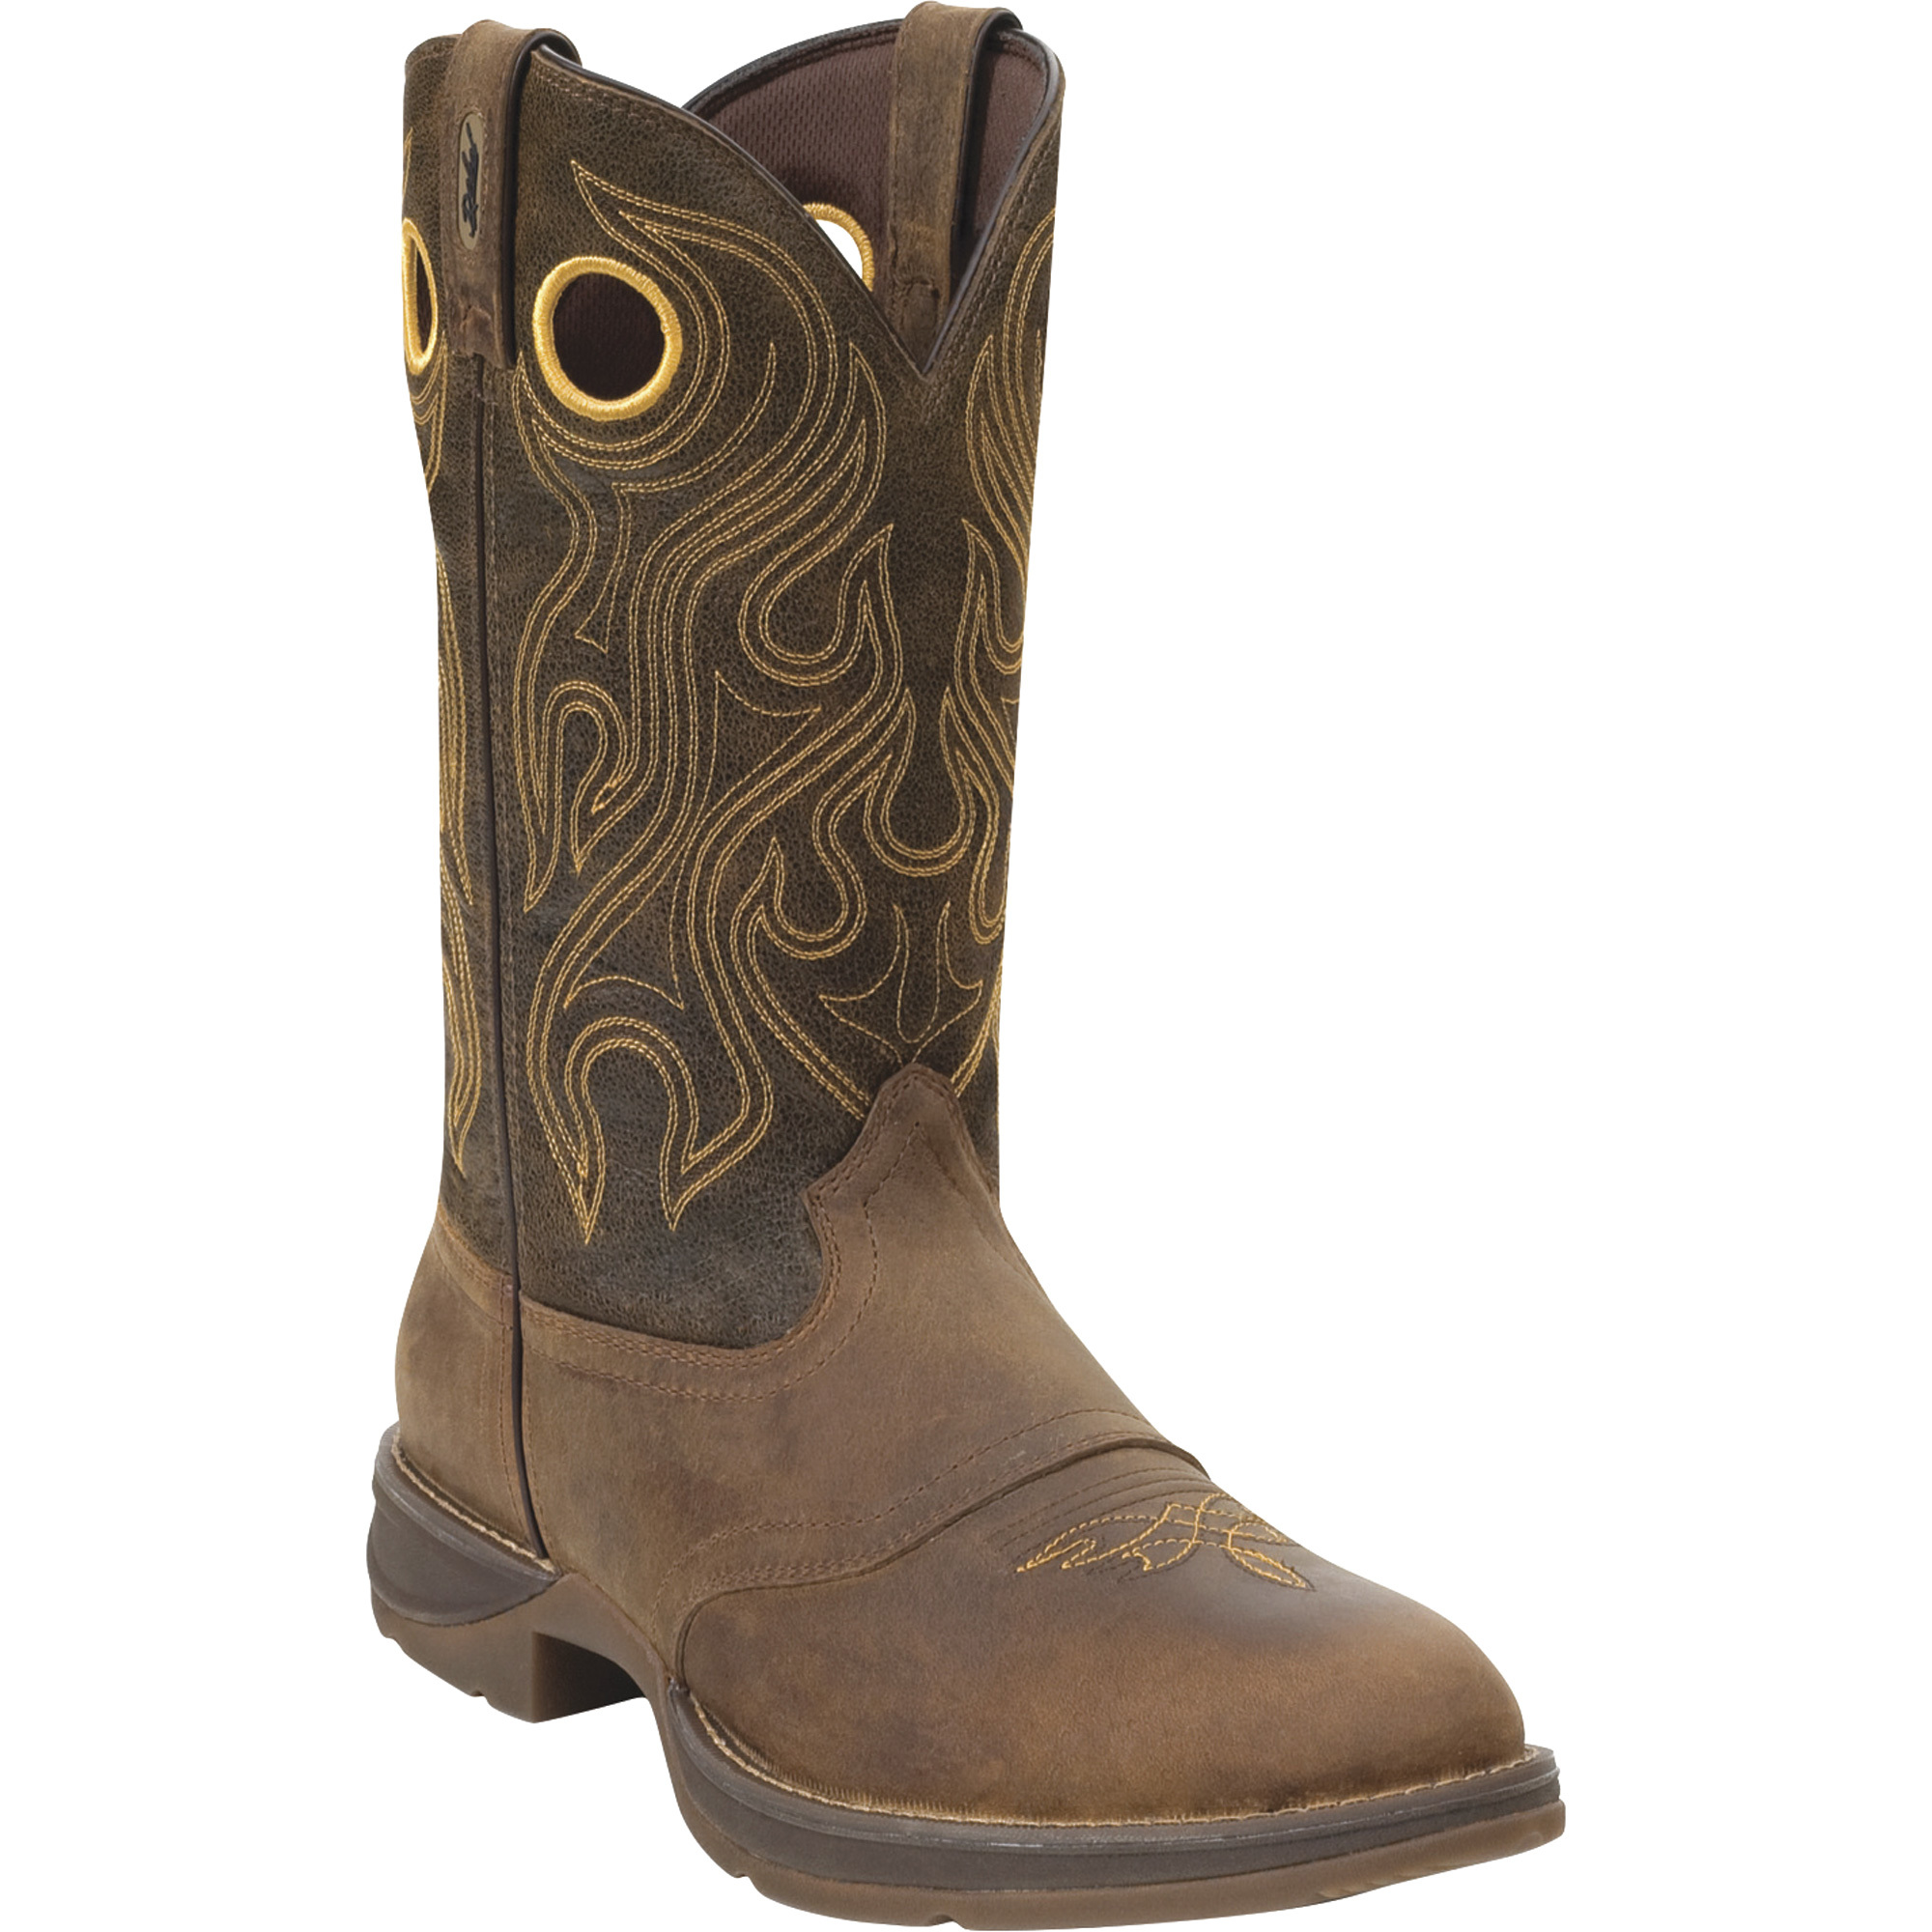 Durango Men's Rebel 12Inch Saddle Western Boot - Brown, Size 10 1/2 Wide, Model DB 5468